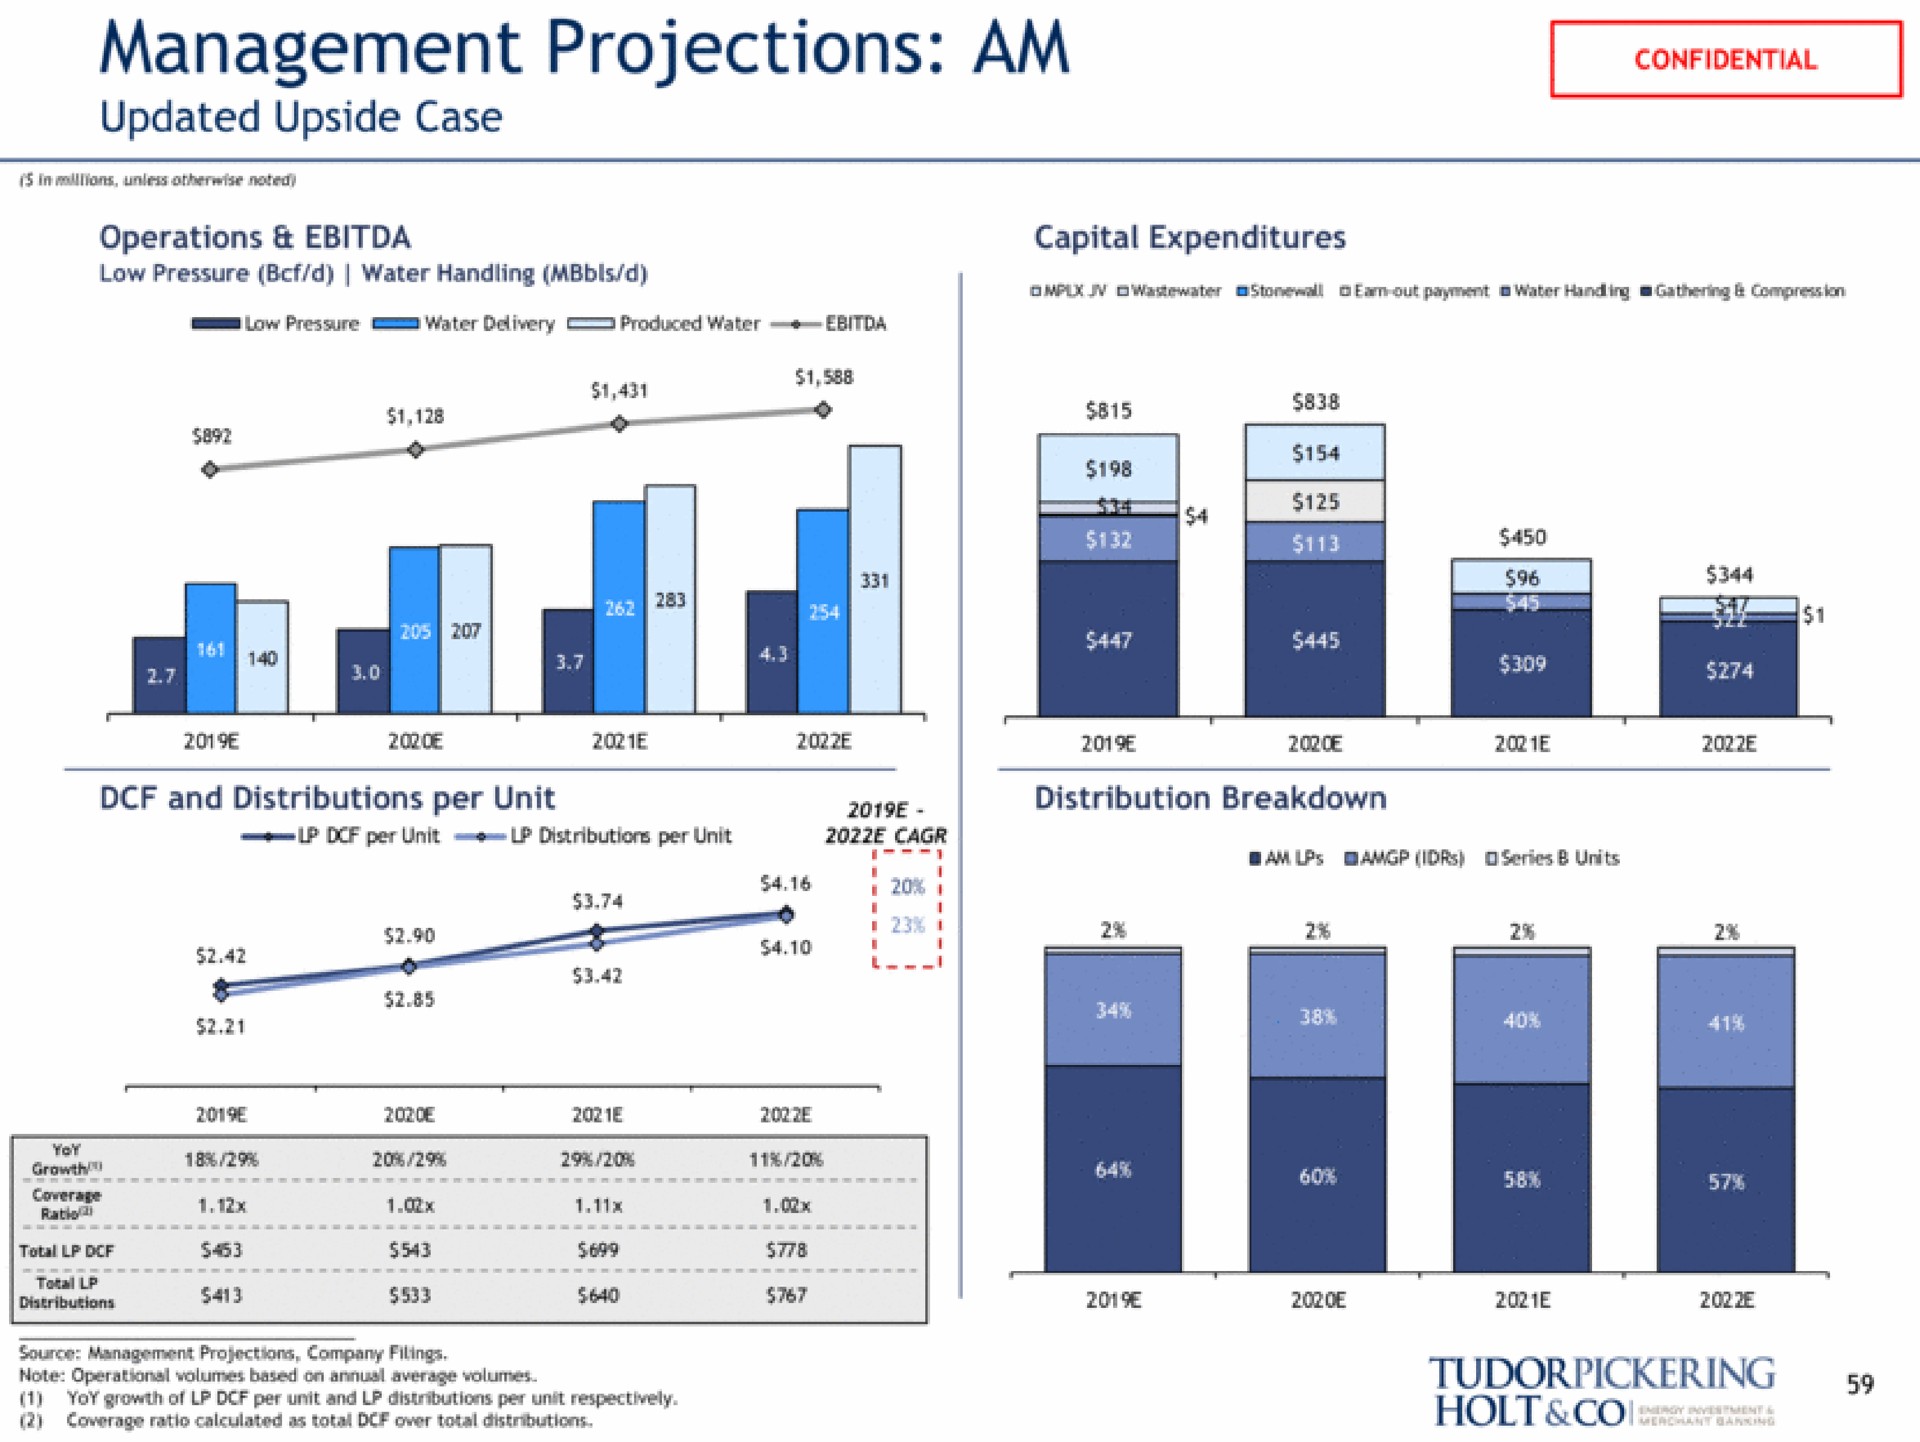 management projections am updated upside case | Tudor, Pickering, Holt & Co